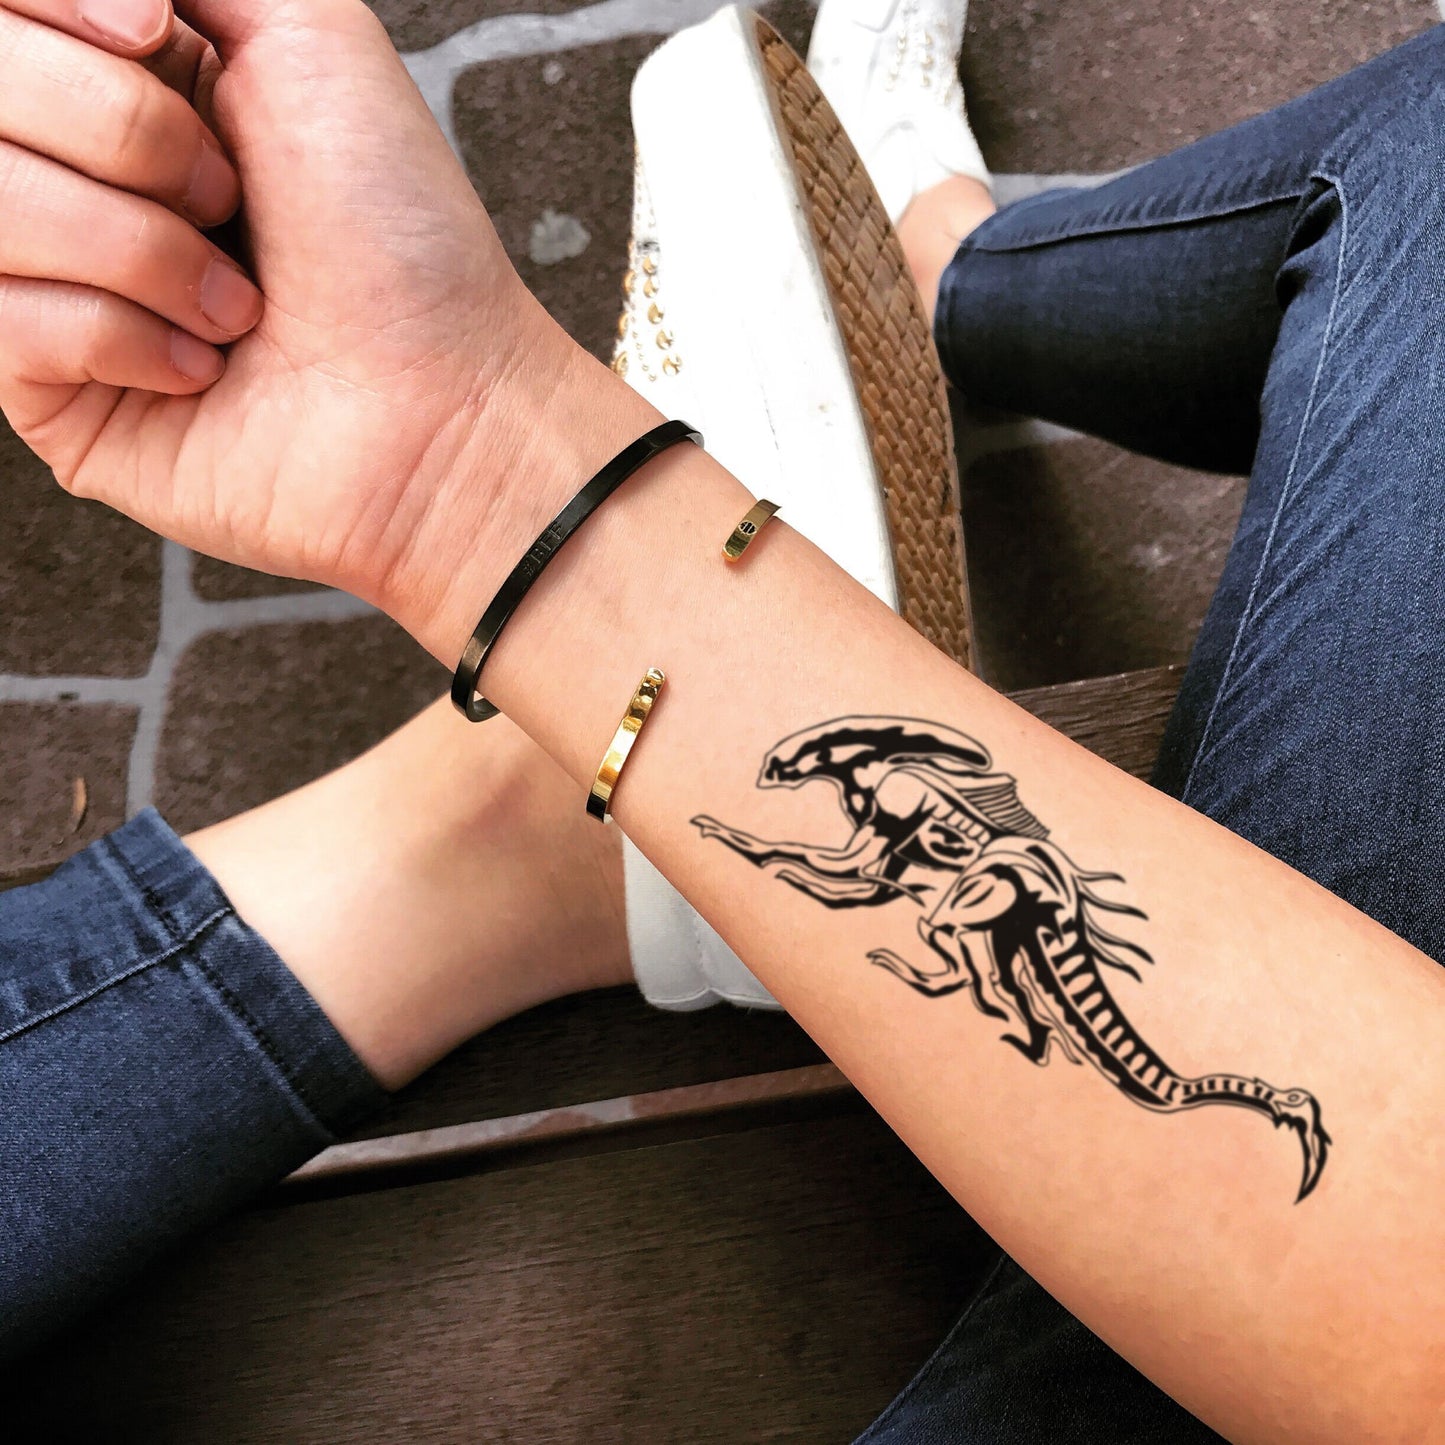 fake medium xenomorph illustrative temporary tattoo sticker design idea on forearm